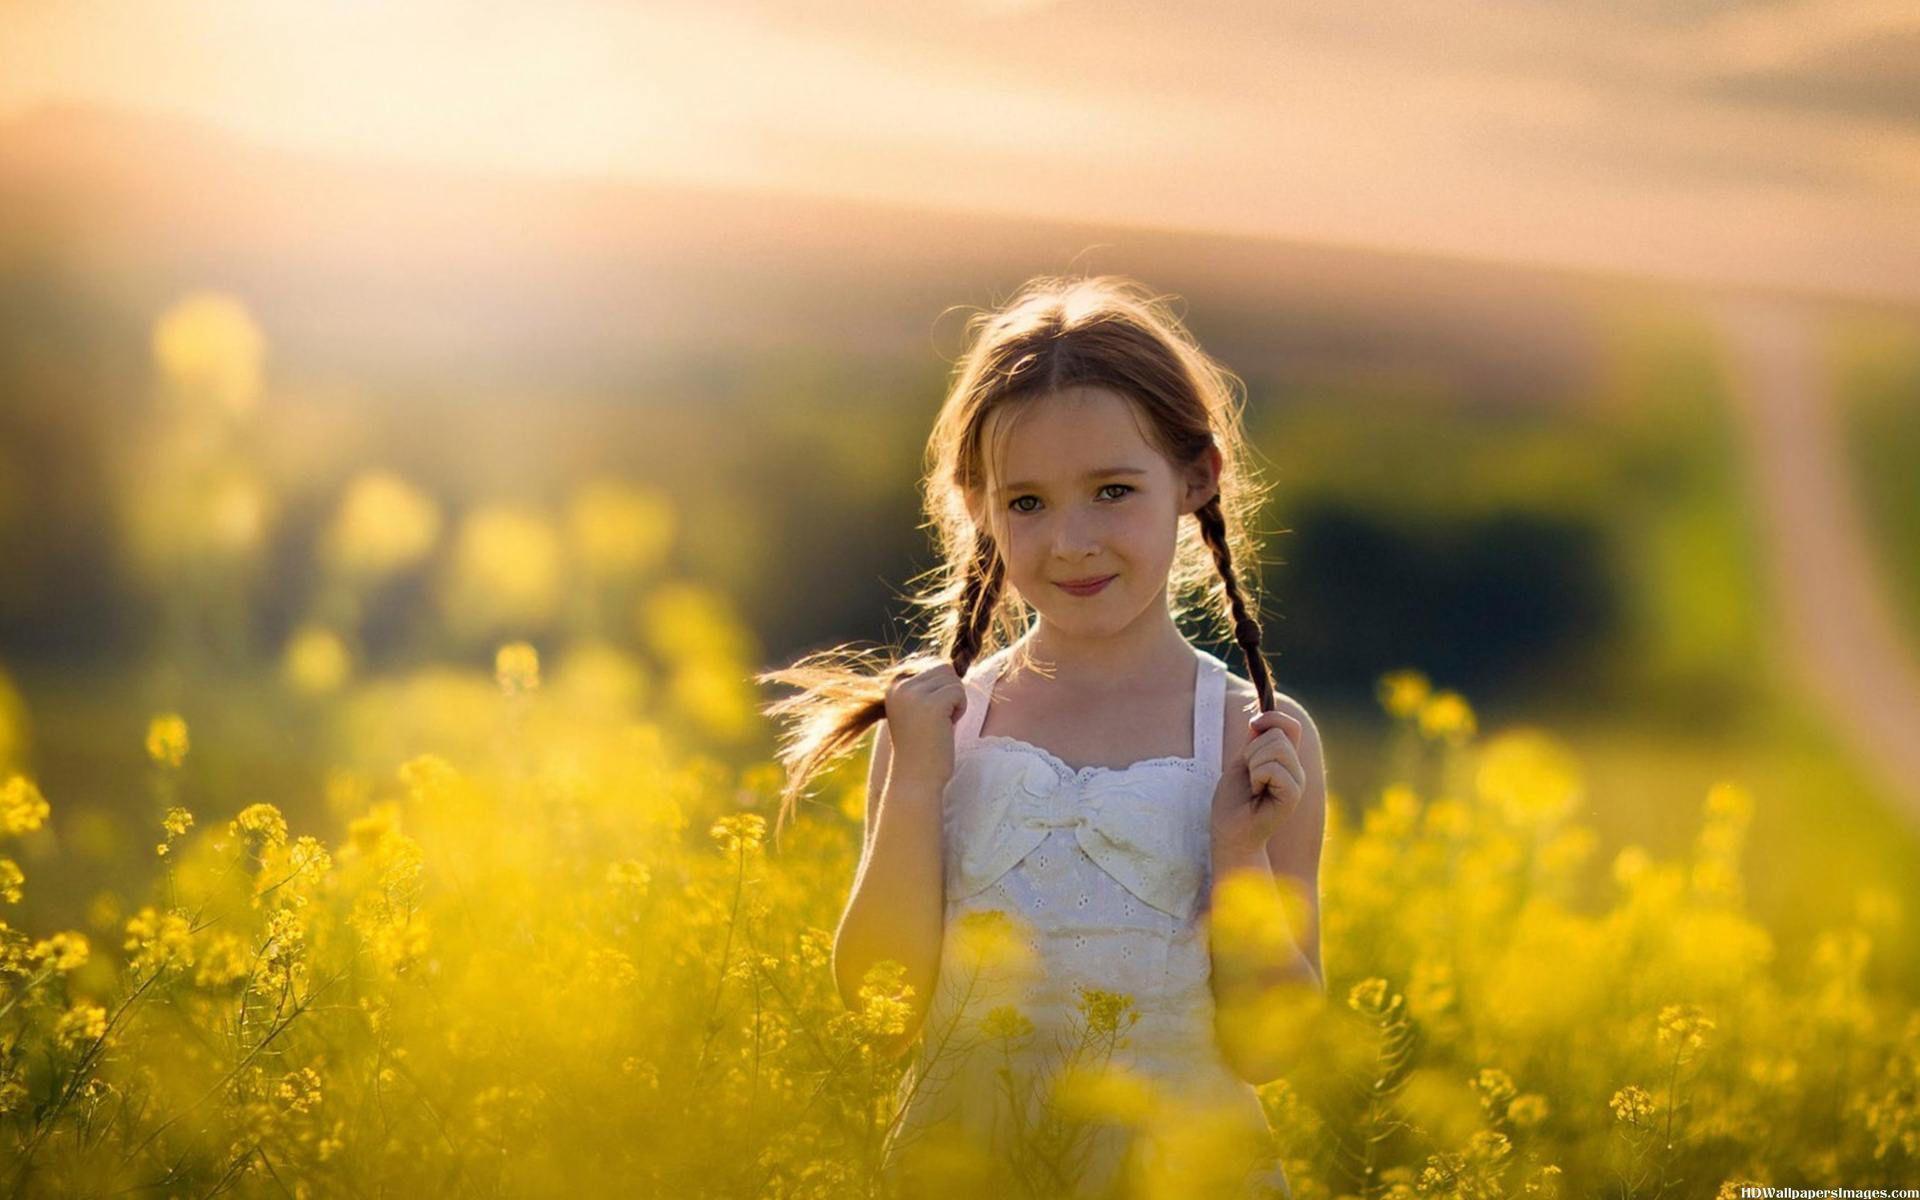 Spiritual Children Cute Baby Girl In Yellow Flowers Field HD Desktop Wallpaper. Baby Girl Picture, Cute Baby Girl Picture, Cute Baby Girl